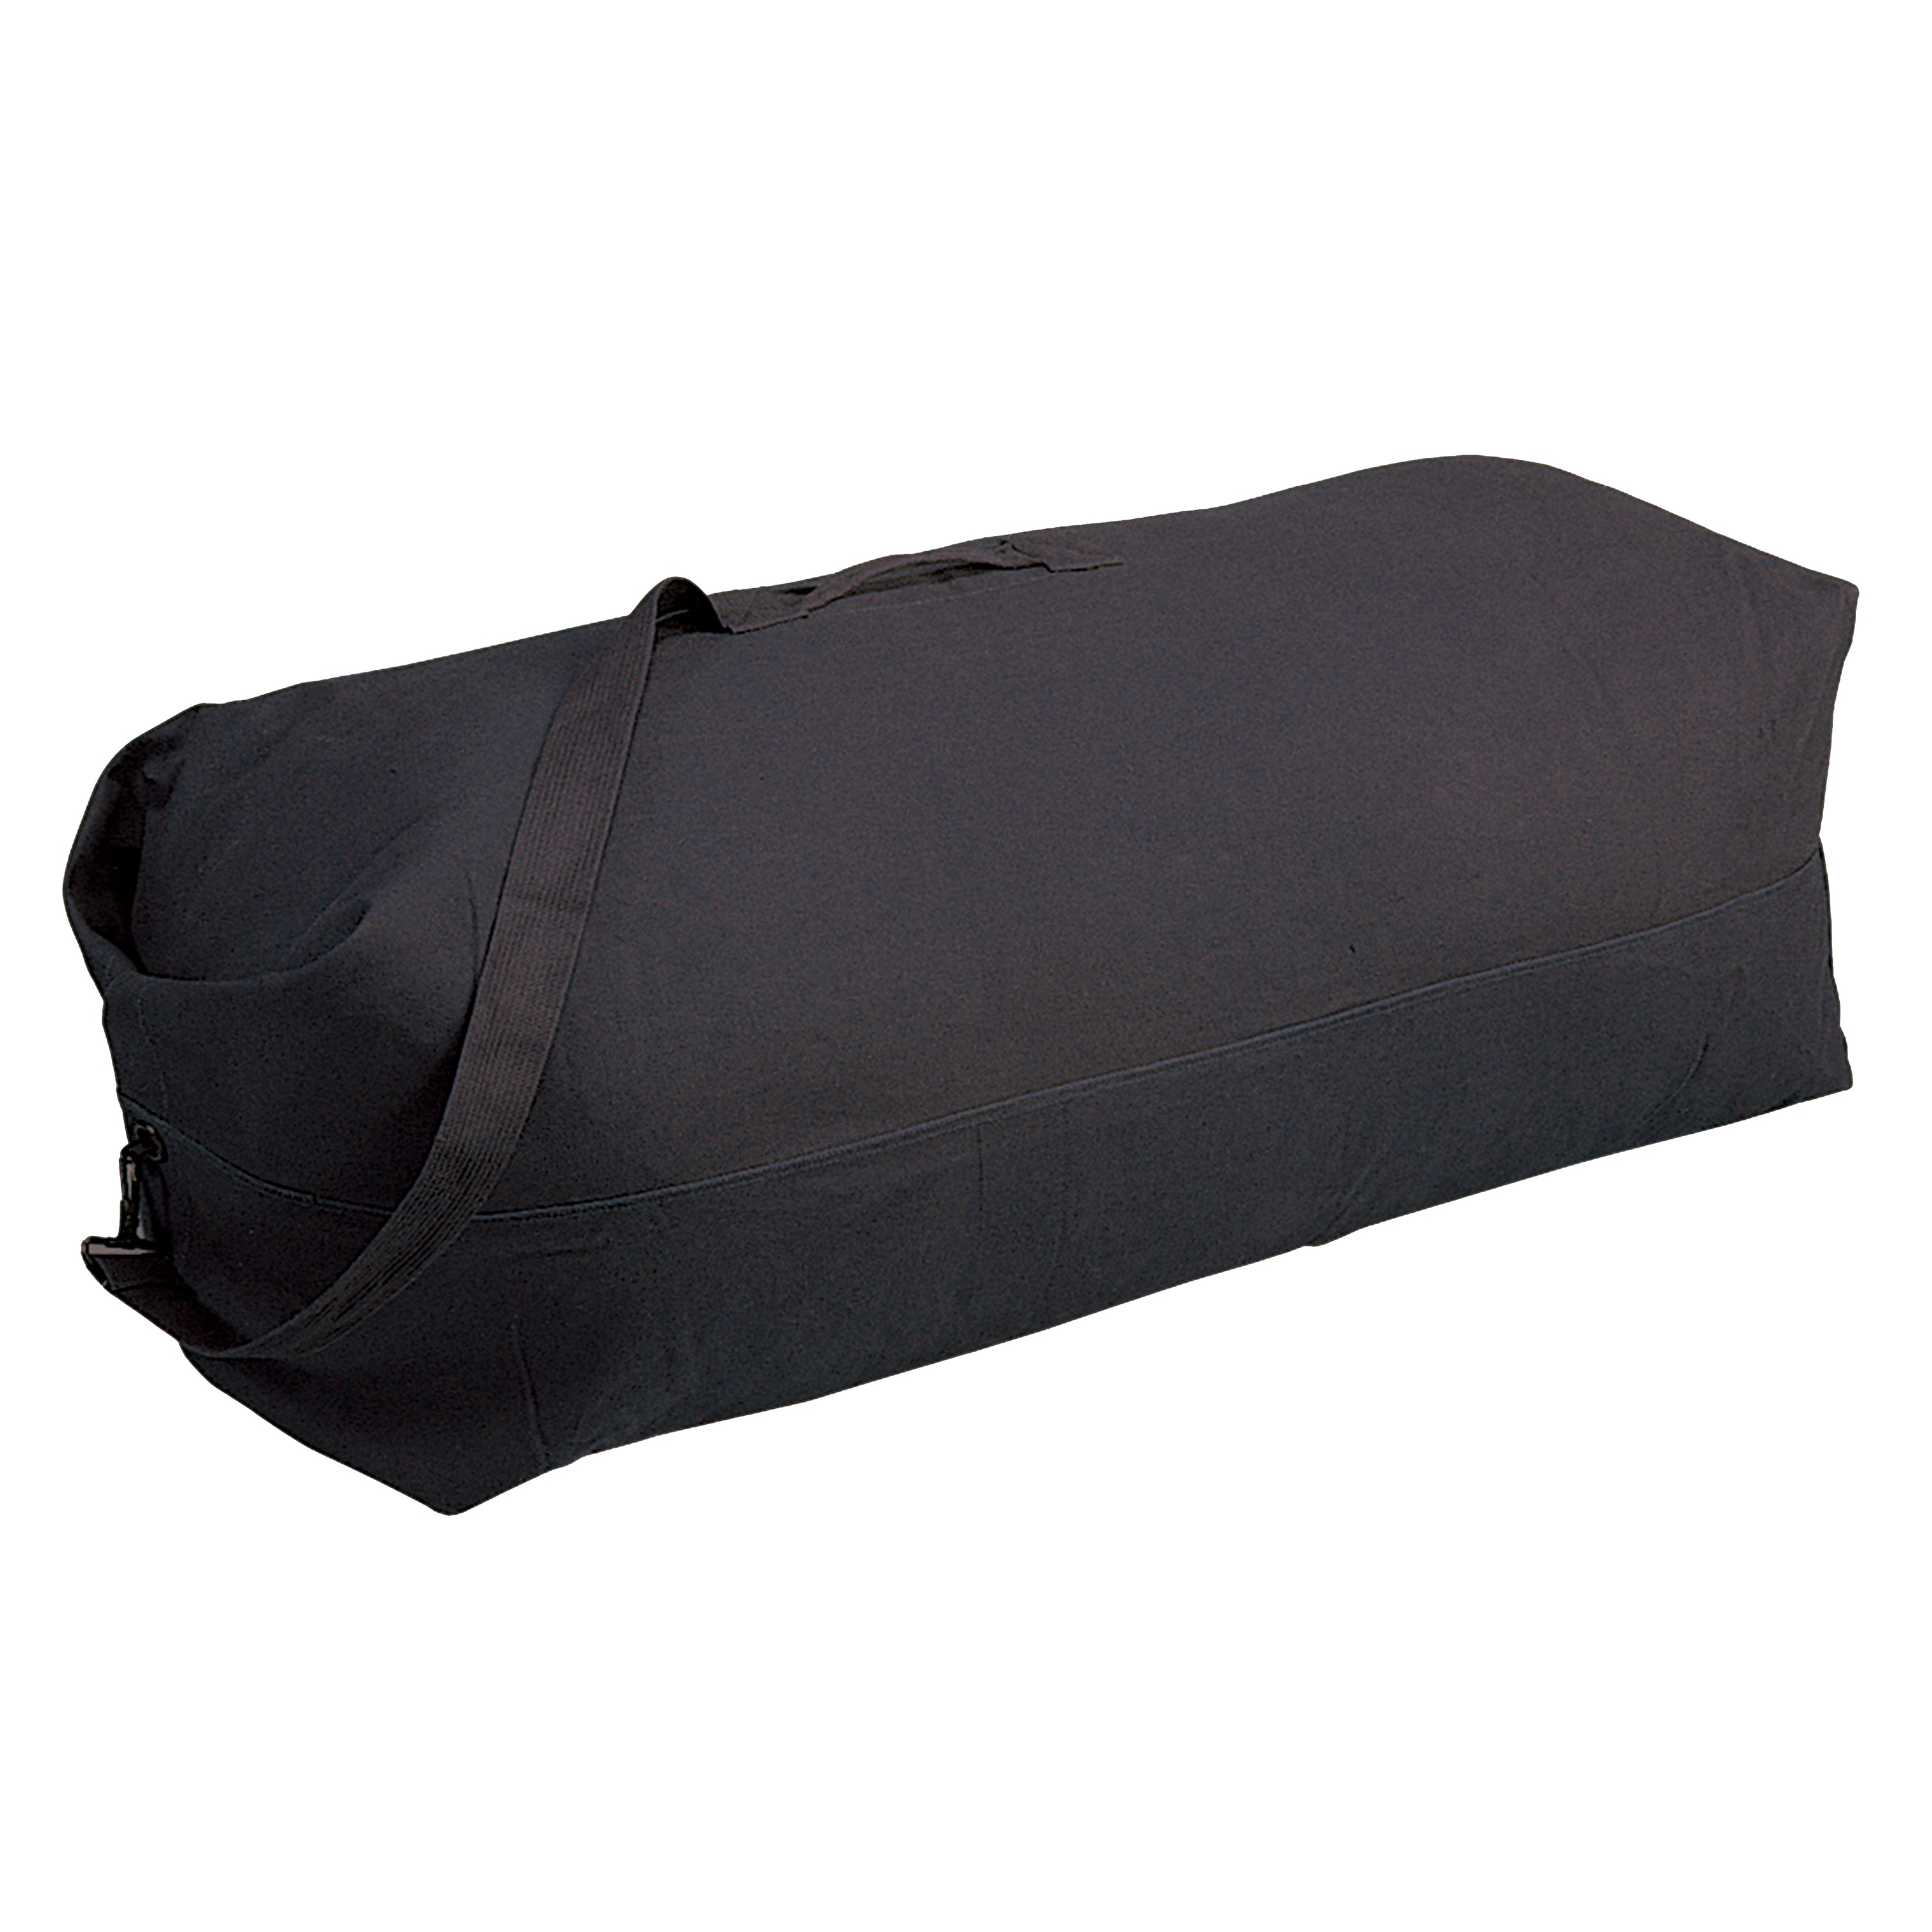 Stansport 50 X 14.25 X 14.25 Black Crossbody Bag